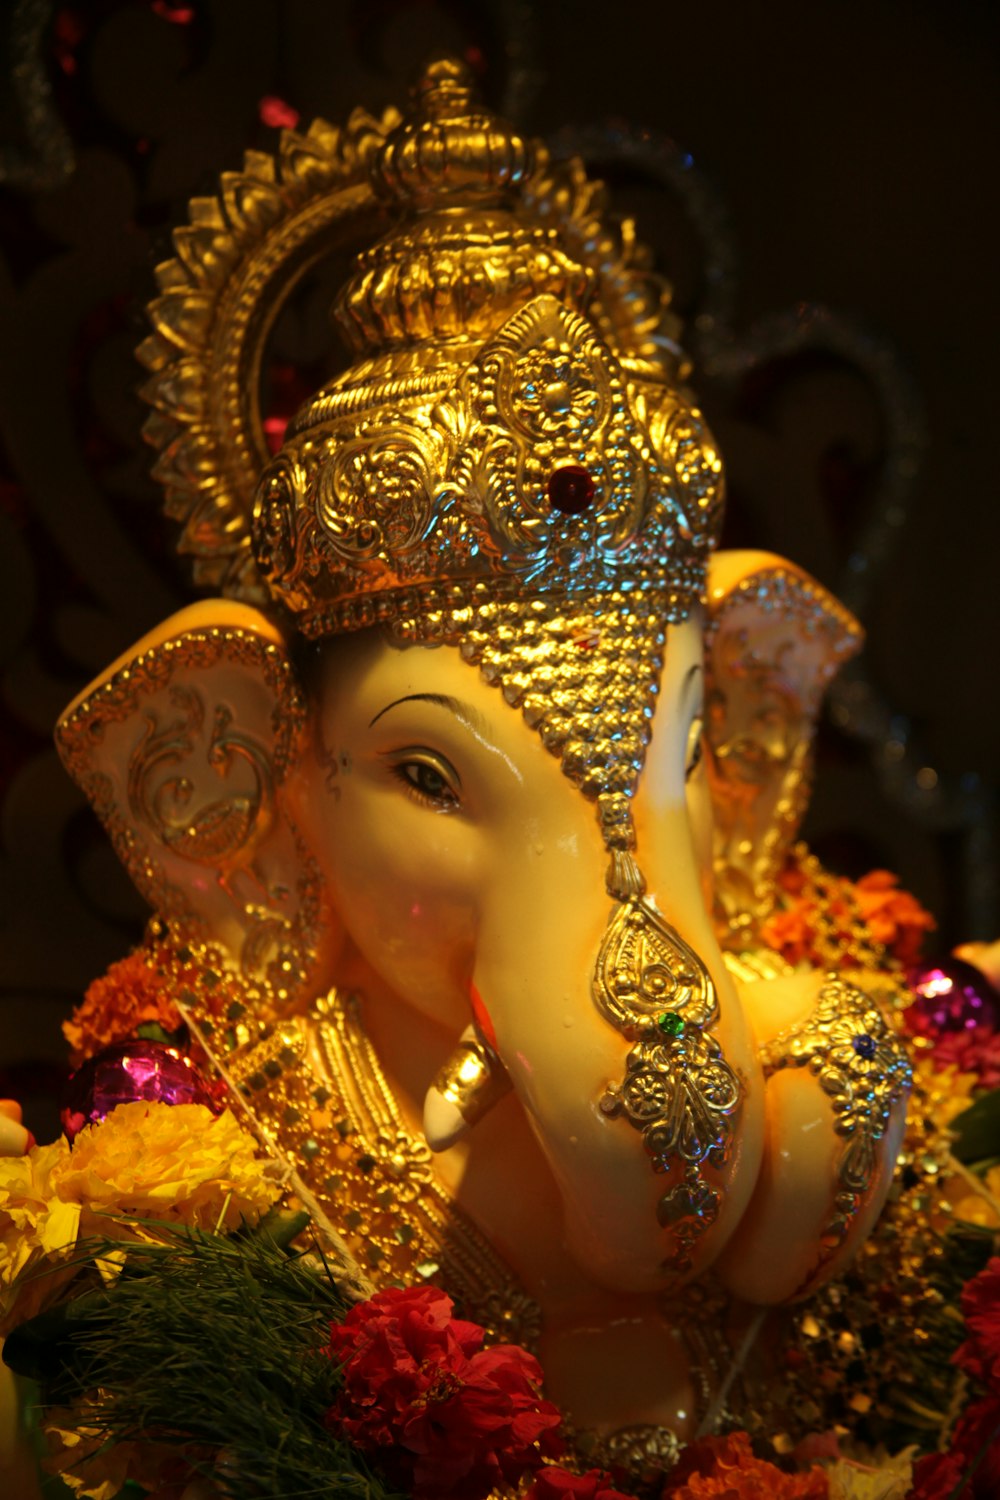 gold and silver hindu deity figurine